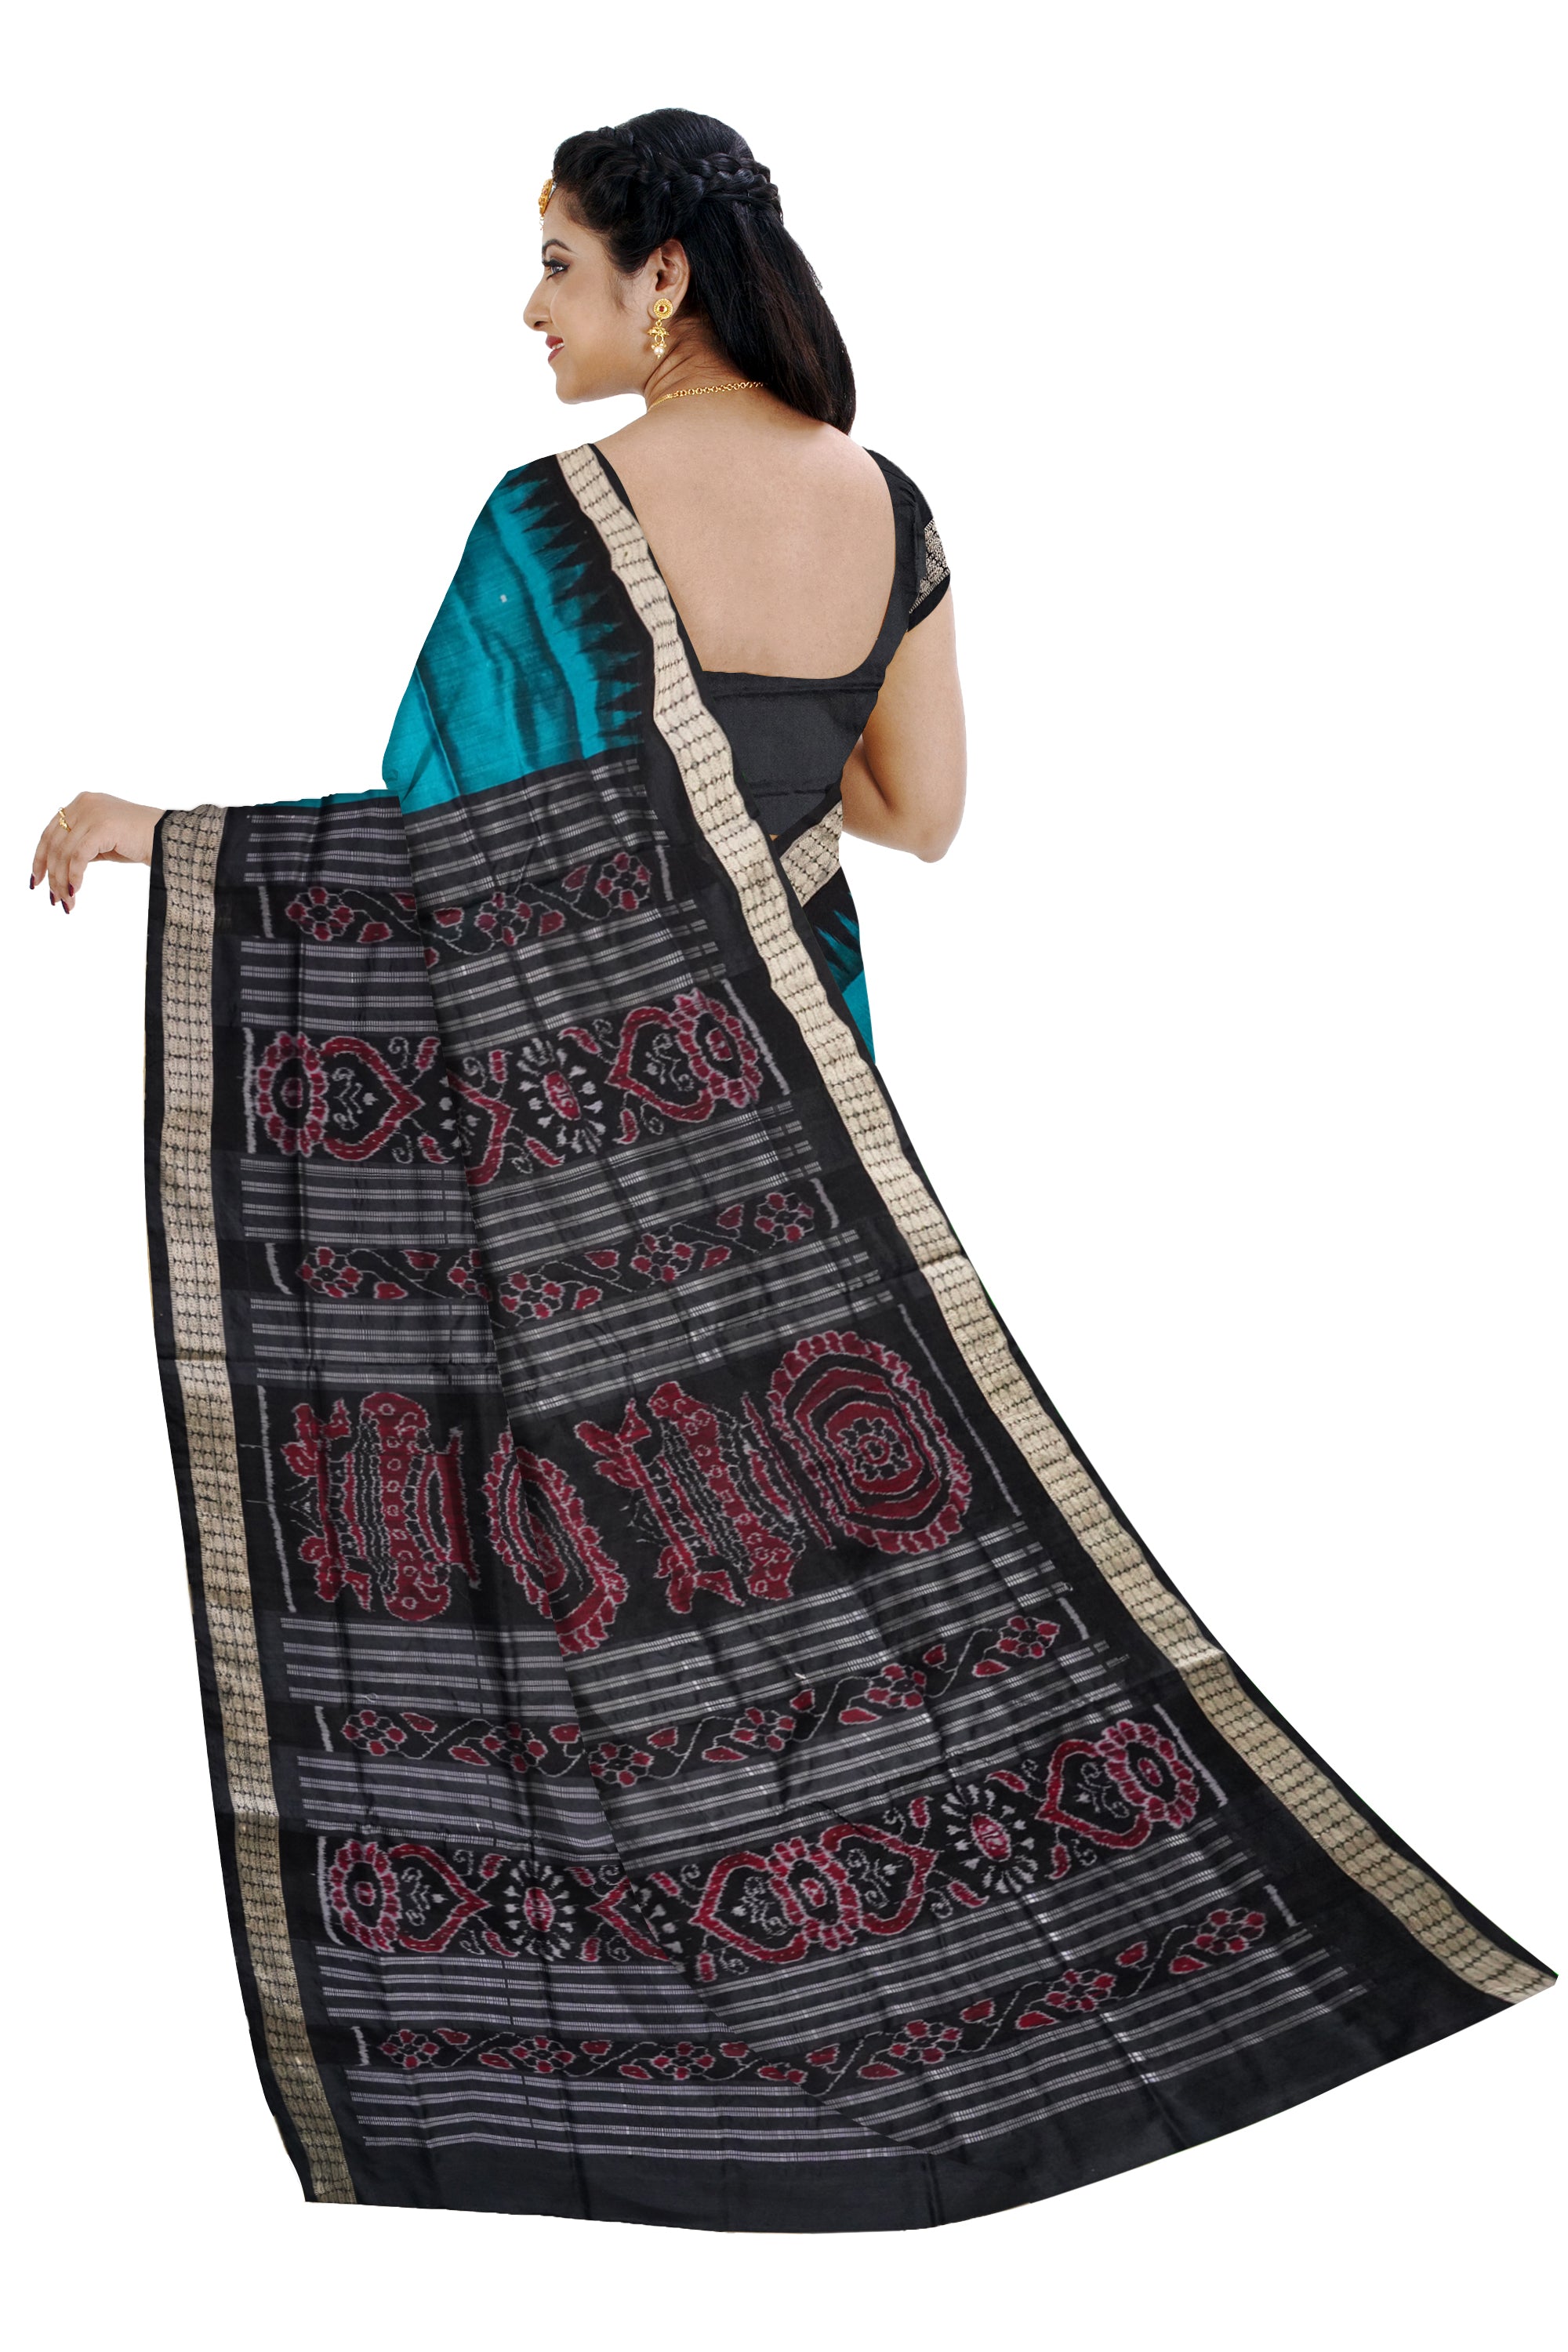 Sky-blue & Black color plain pata saree. - Koshali Arts & Crafts Enterprise